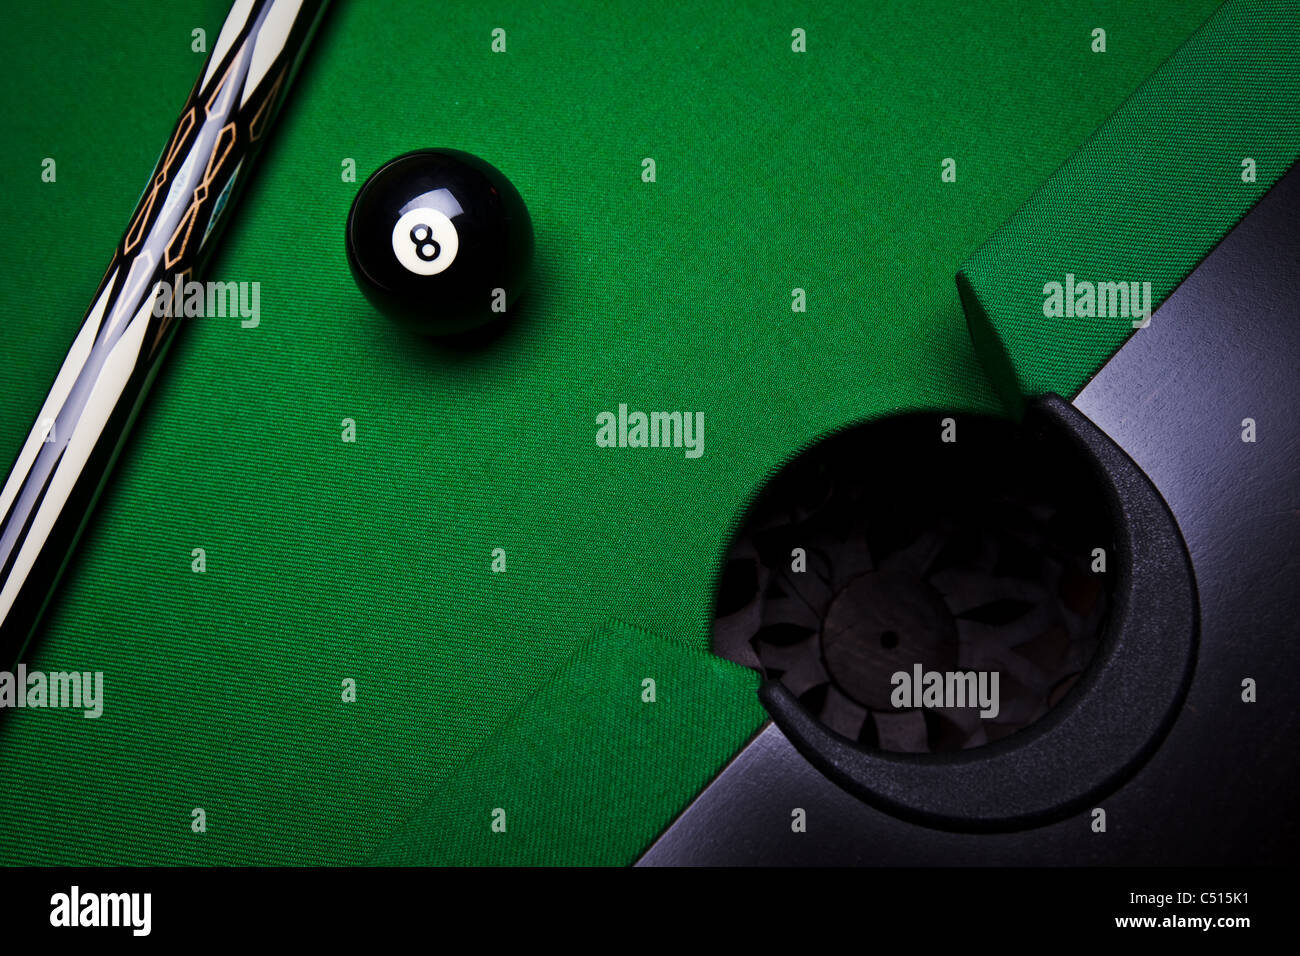 Billiard balls over green table Stock Photo